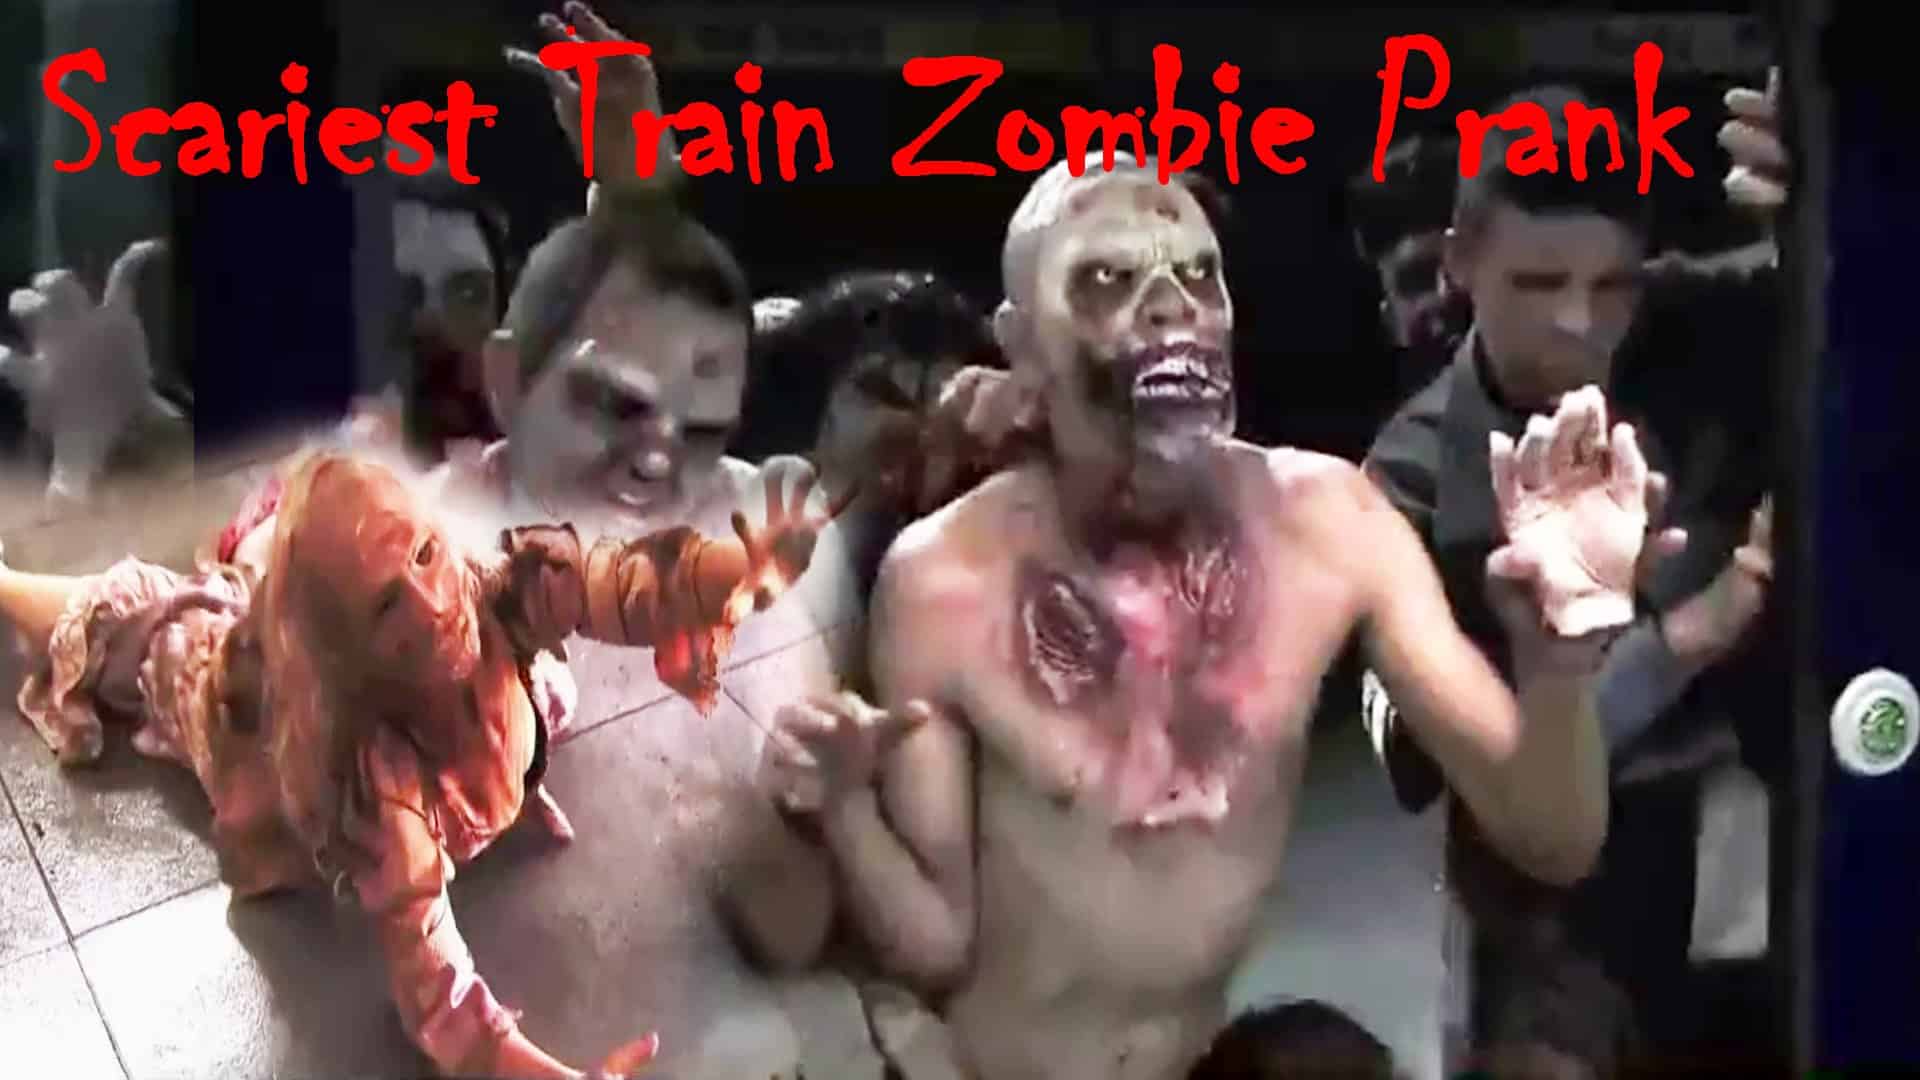 Subway zombie prank